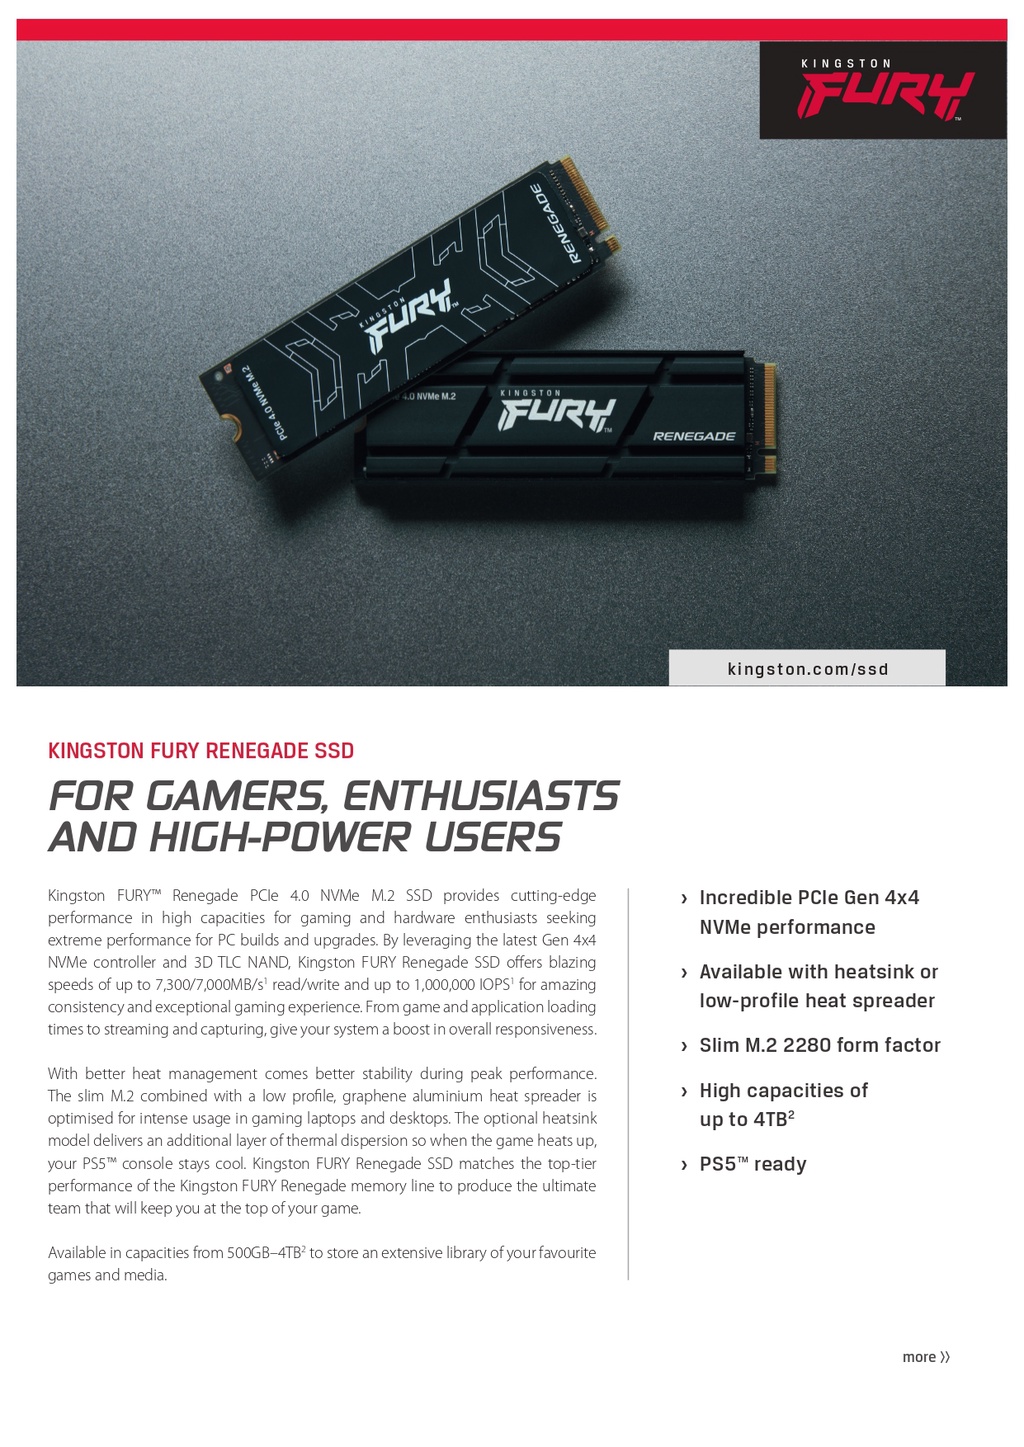 Kingston SFYRDK/4000G Fury Renegade 4TB PCIe Gen 4 NVMe M.2